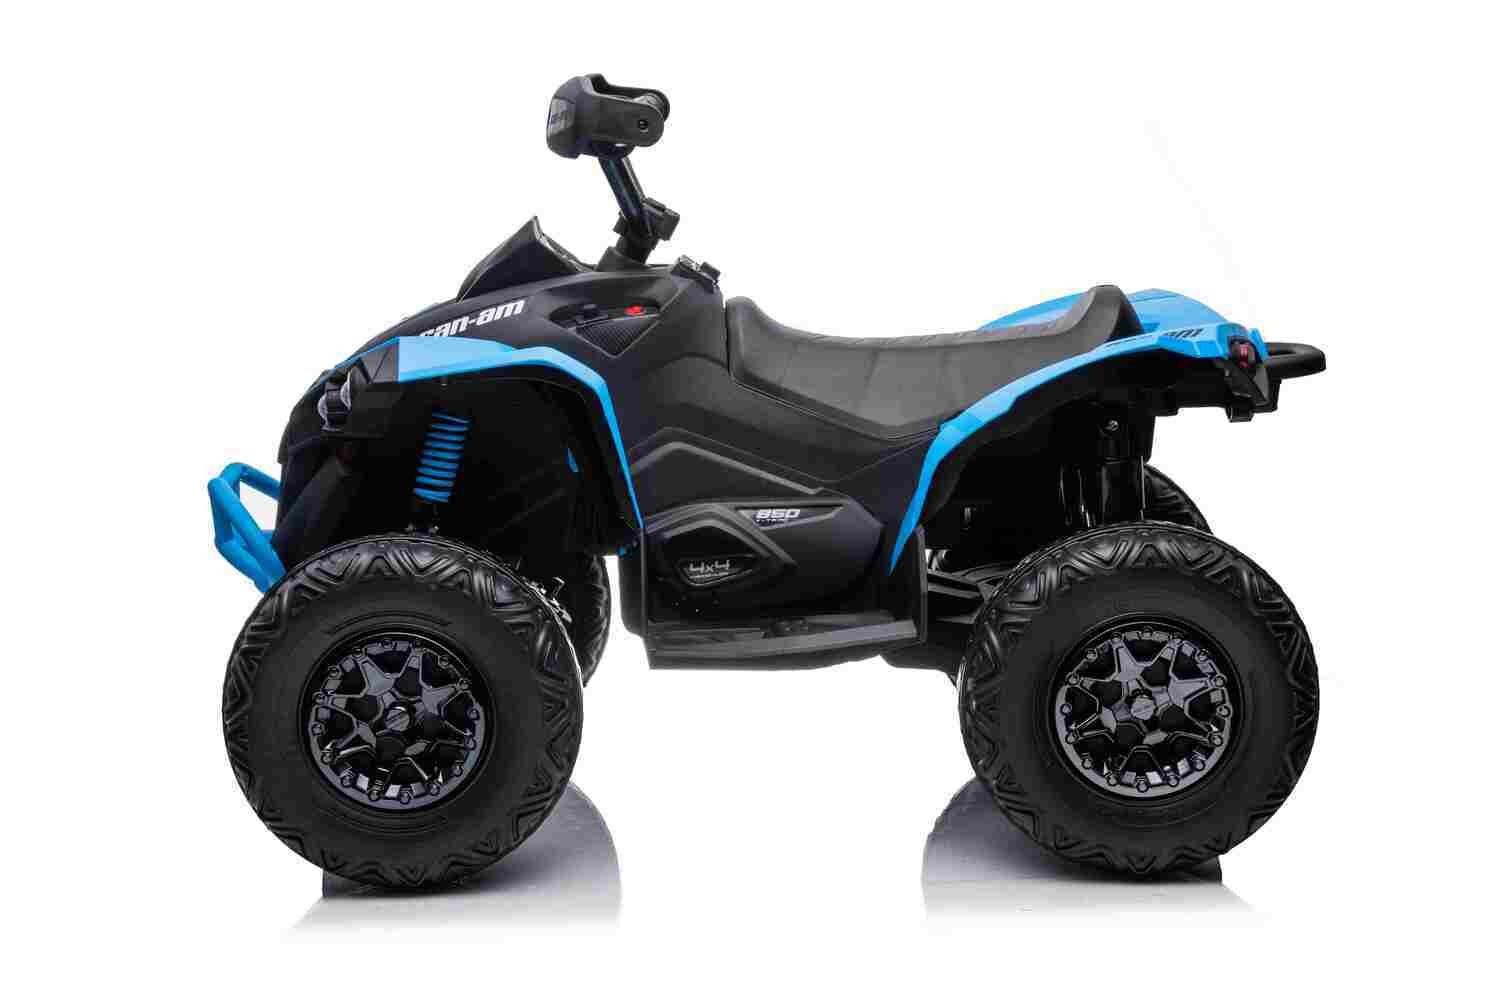 Quad BoGi Can-am Elektro-Kinderquad Elektroquad ATV Blau Kinderfahrzeug 4x4 Antrieb Elektrofahrzeug